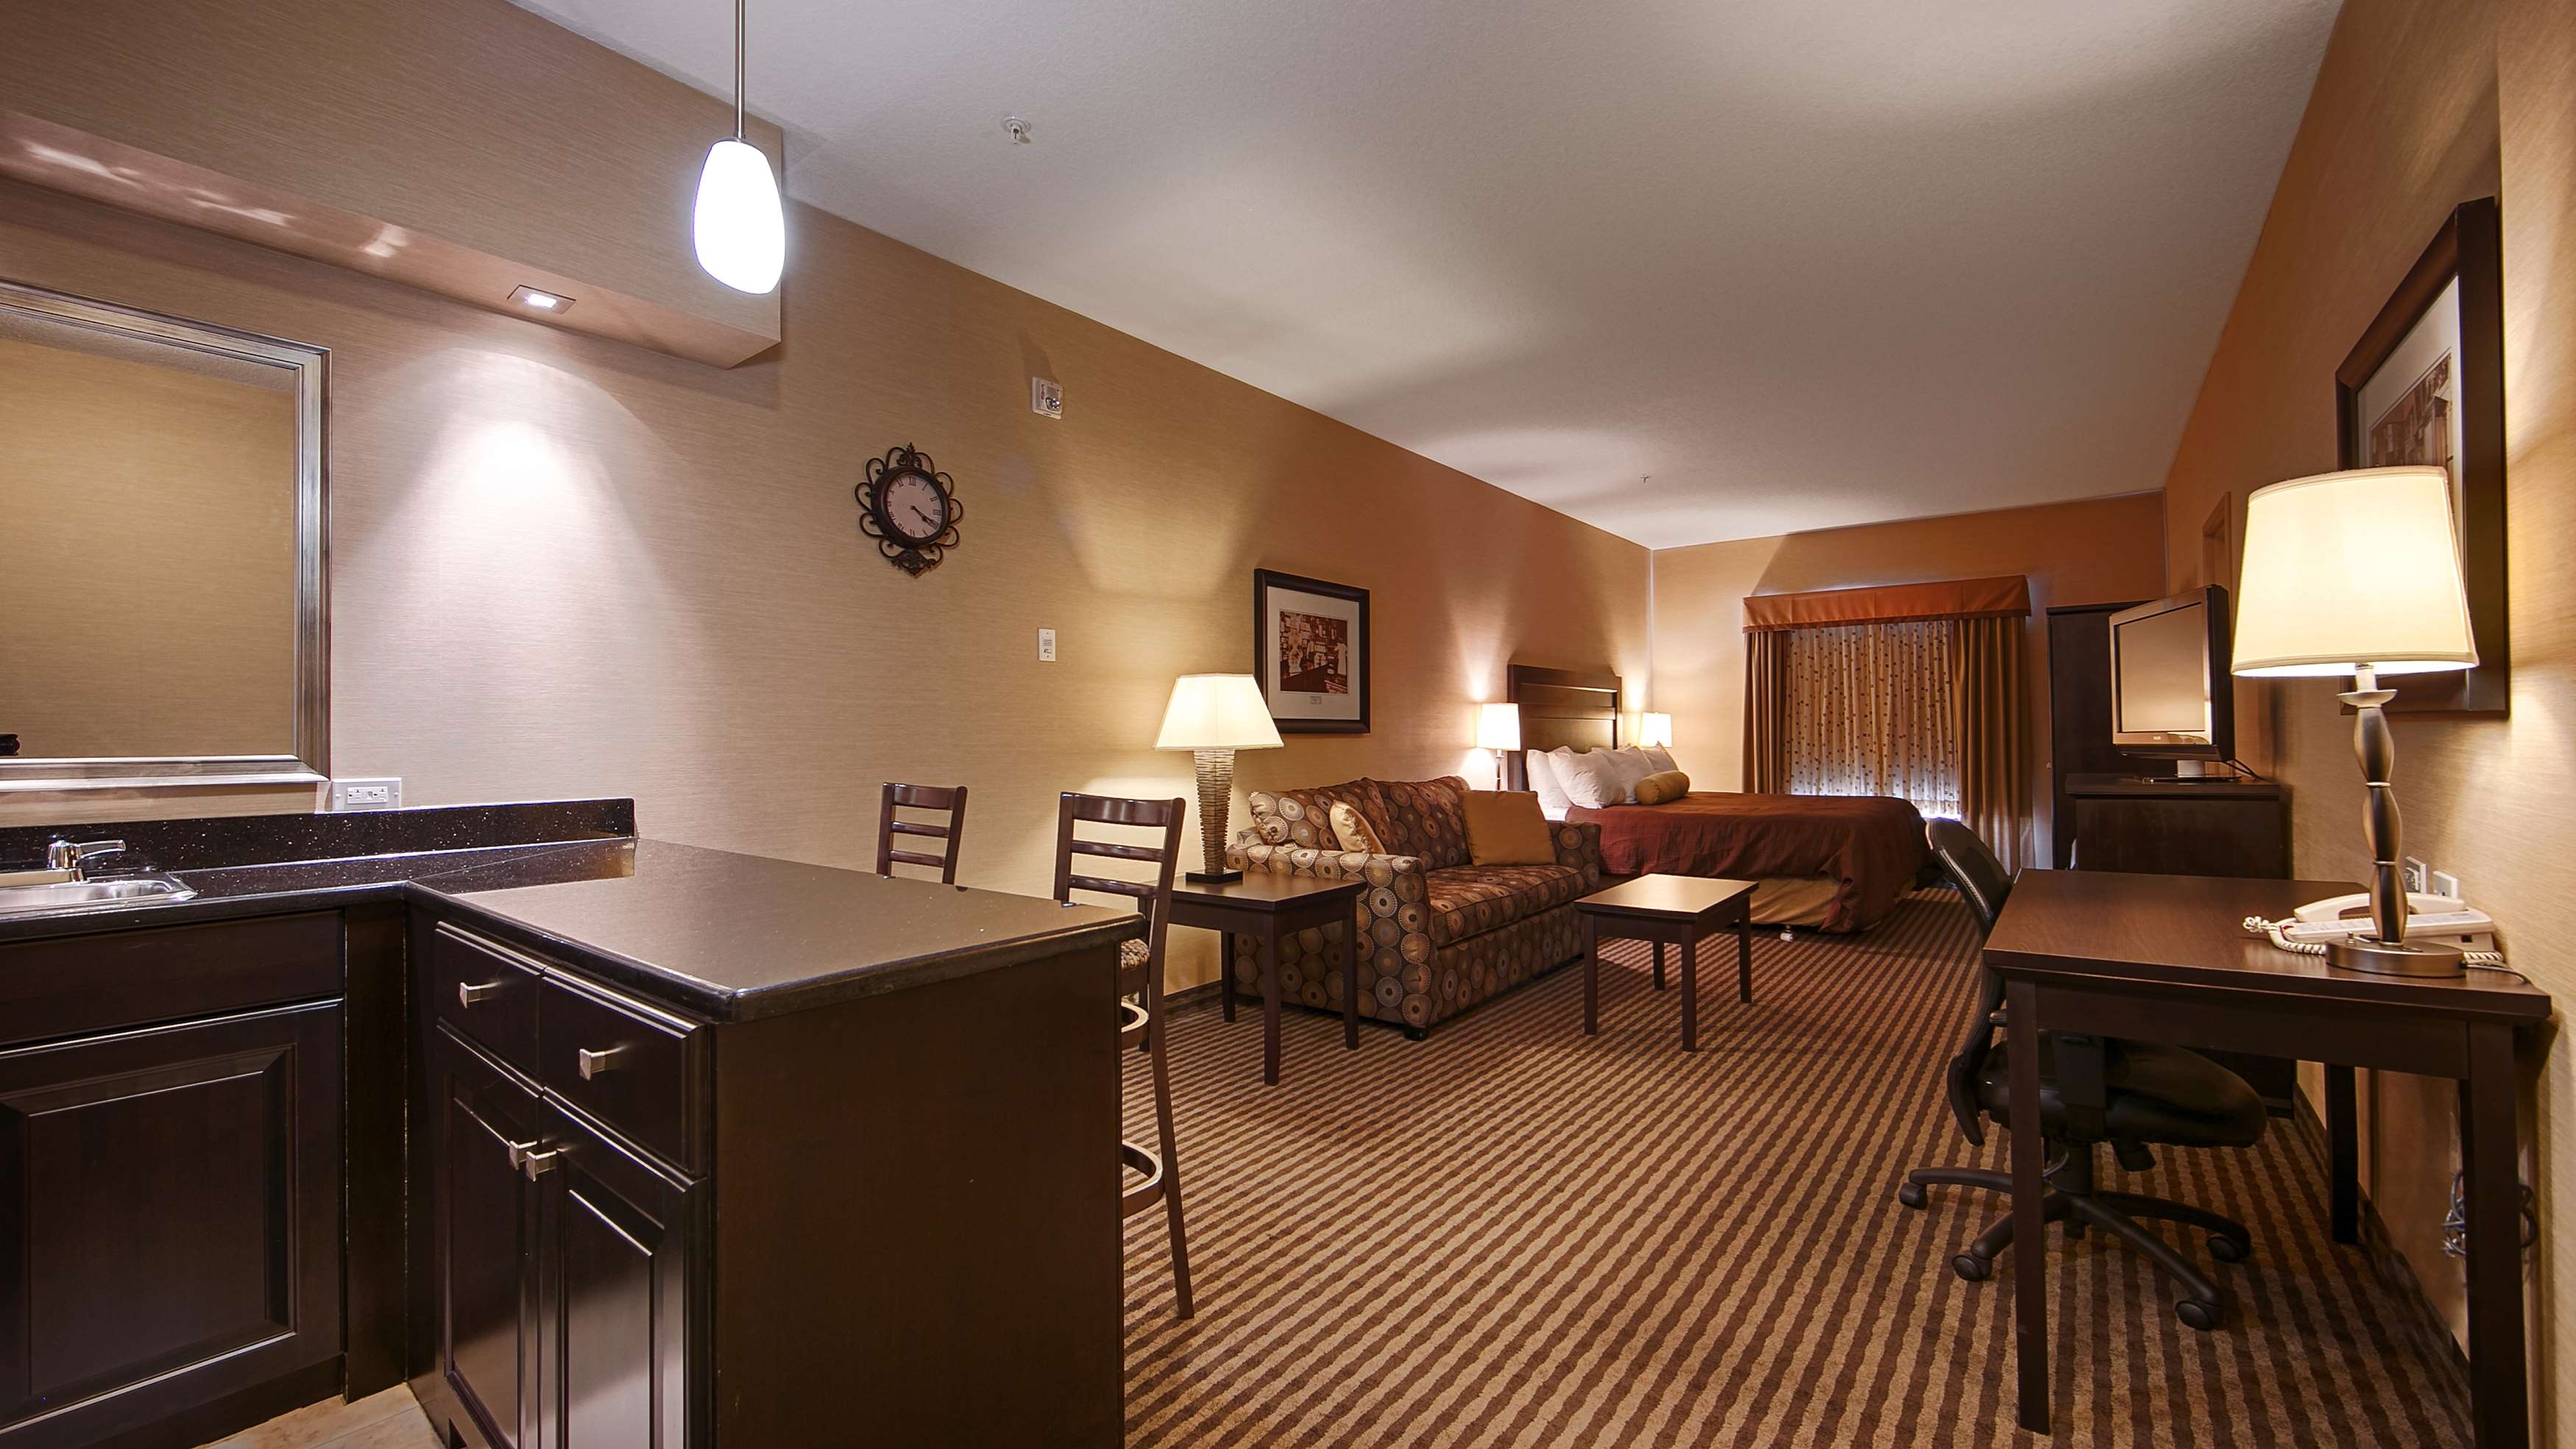 King Suite Best Western Sunrise Inn & Suites Stony Plain (780)968-1716